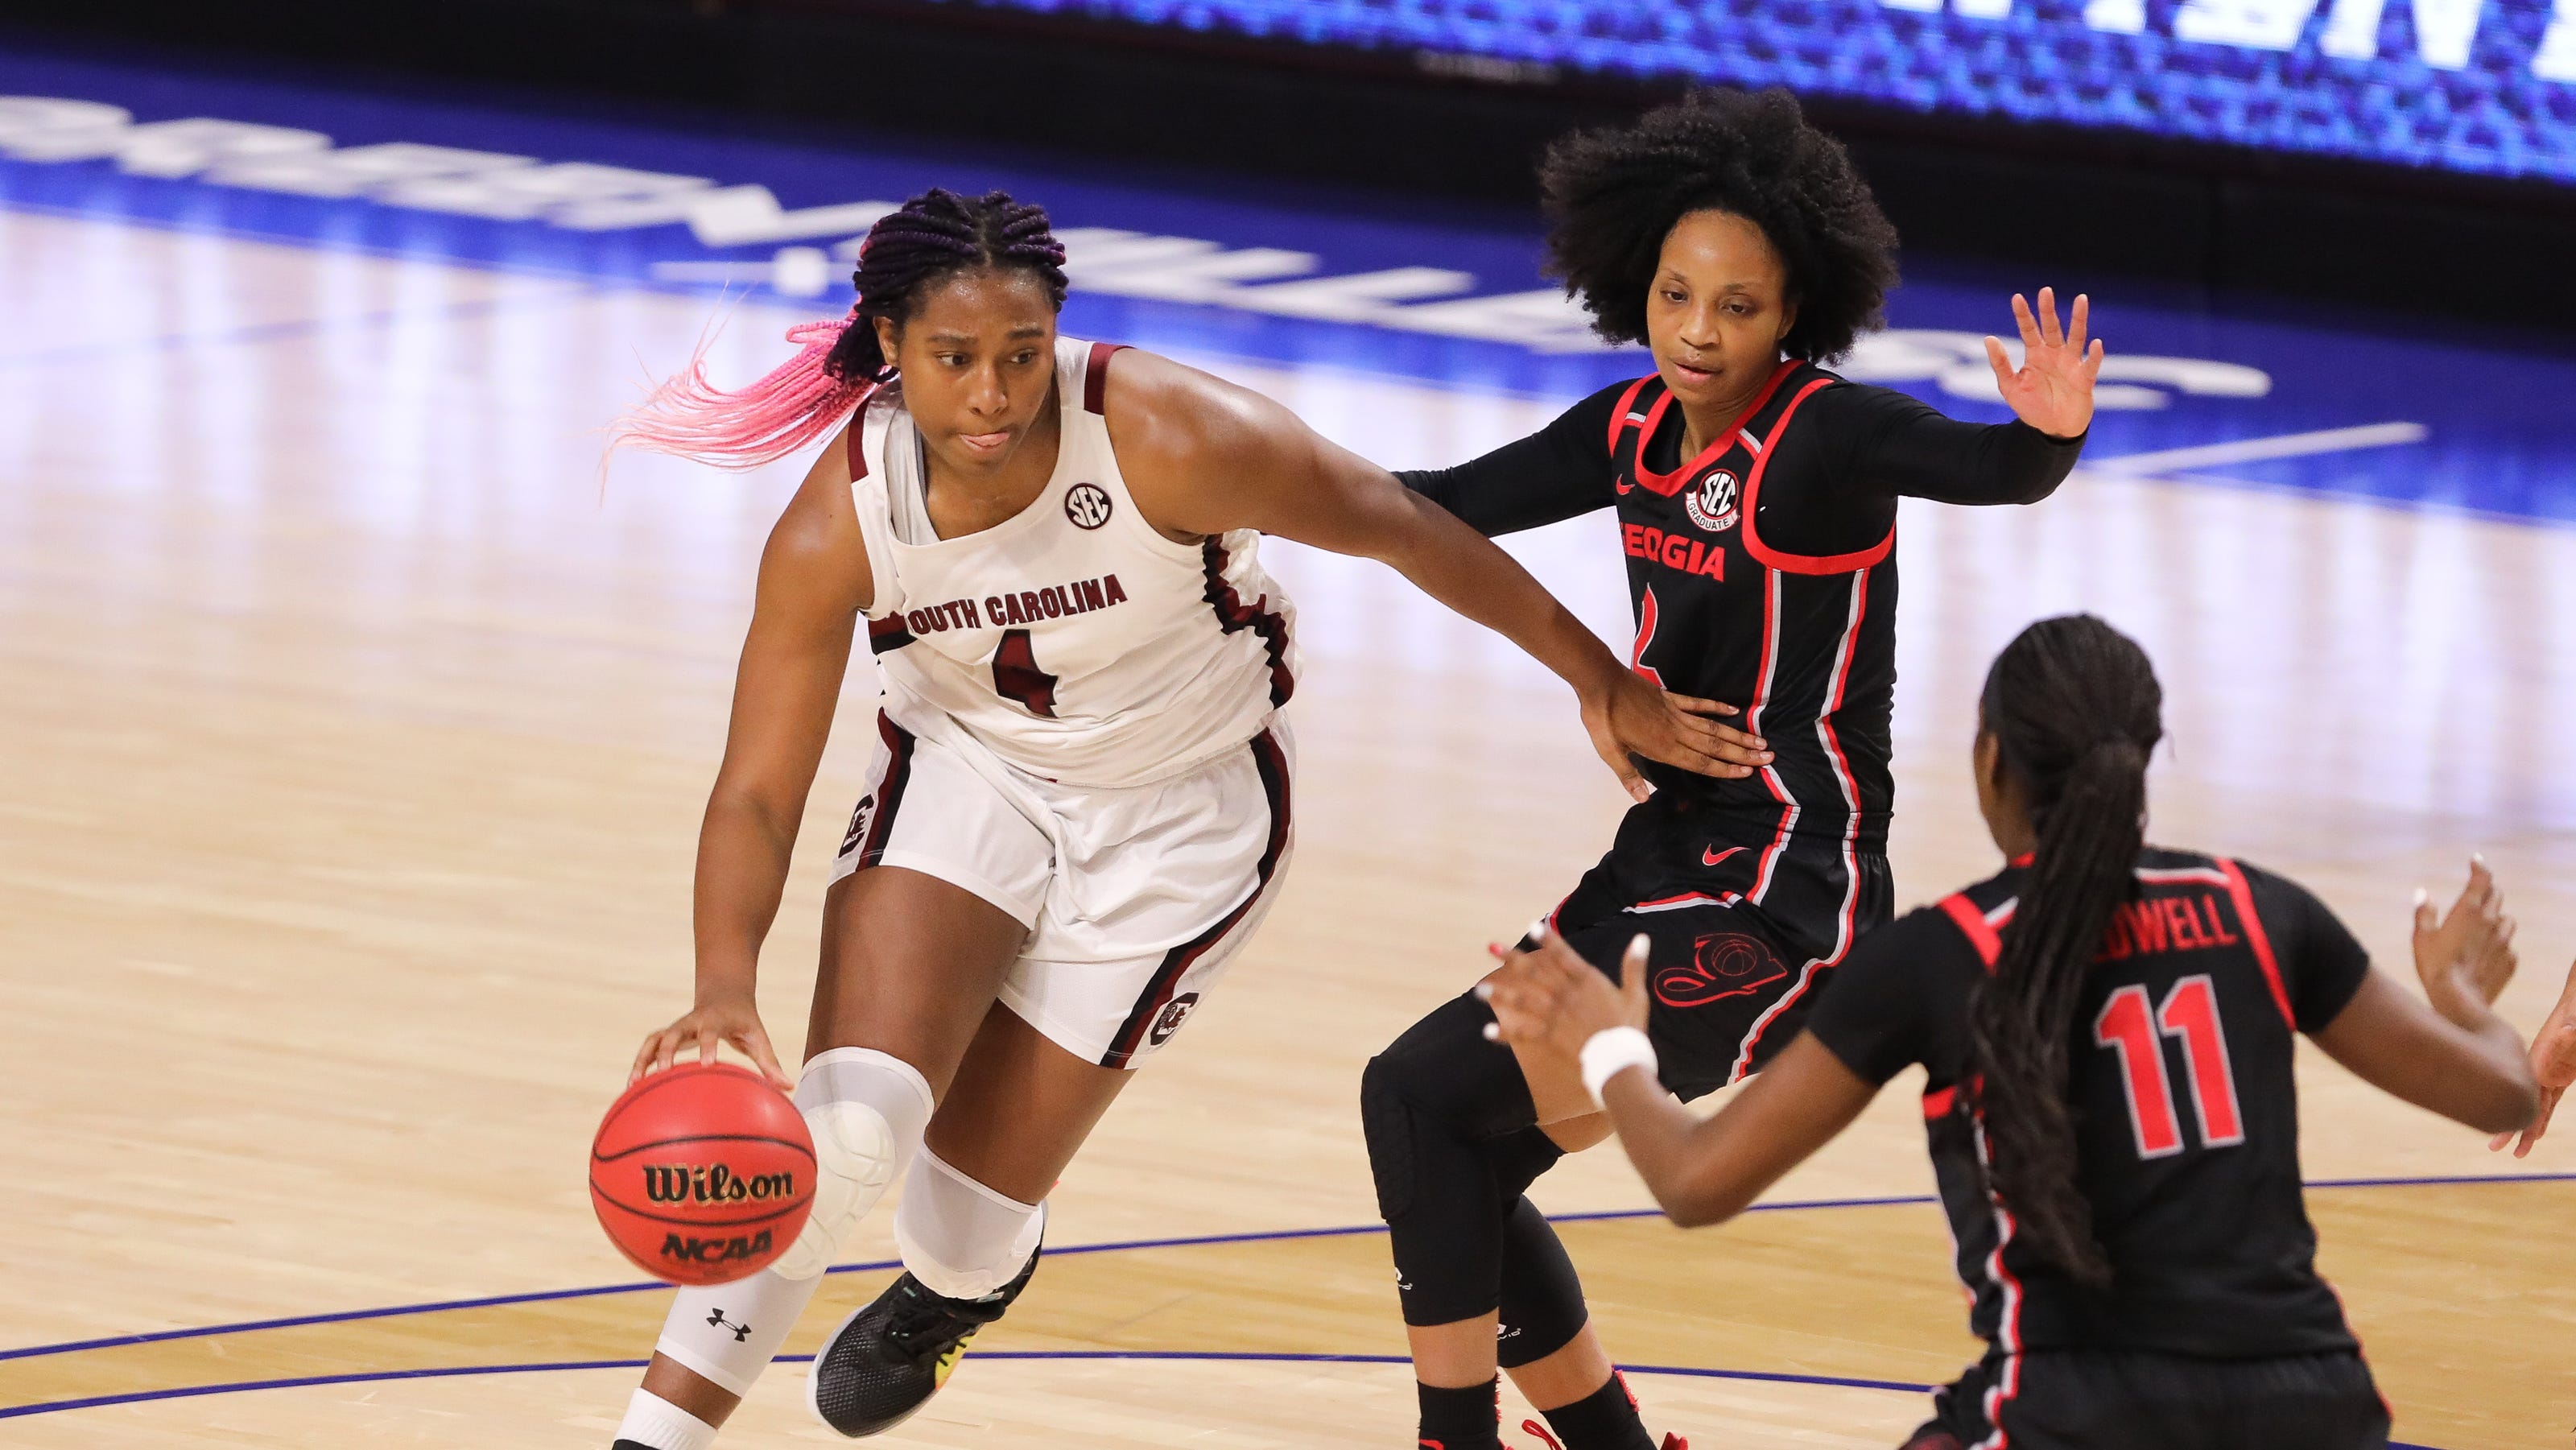 South Carolina defeats Georgia to win the SEC Women's Basketball Tournament